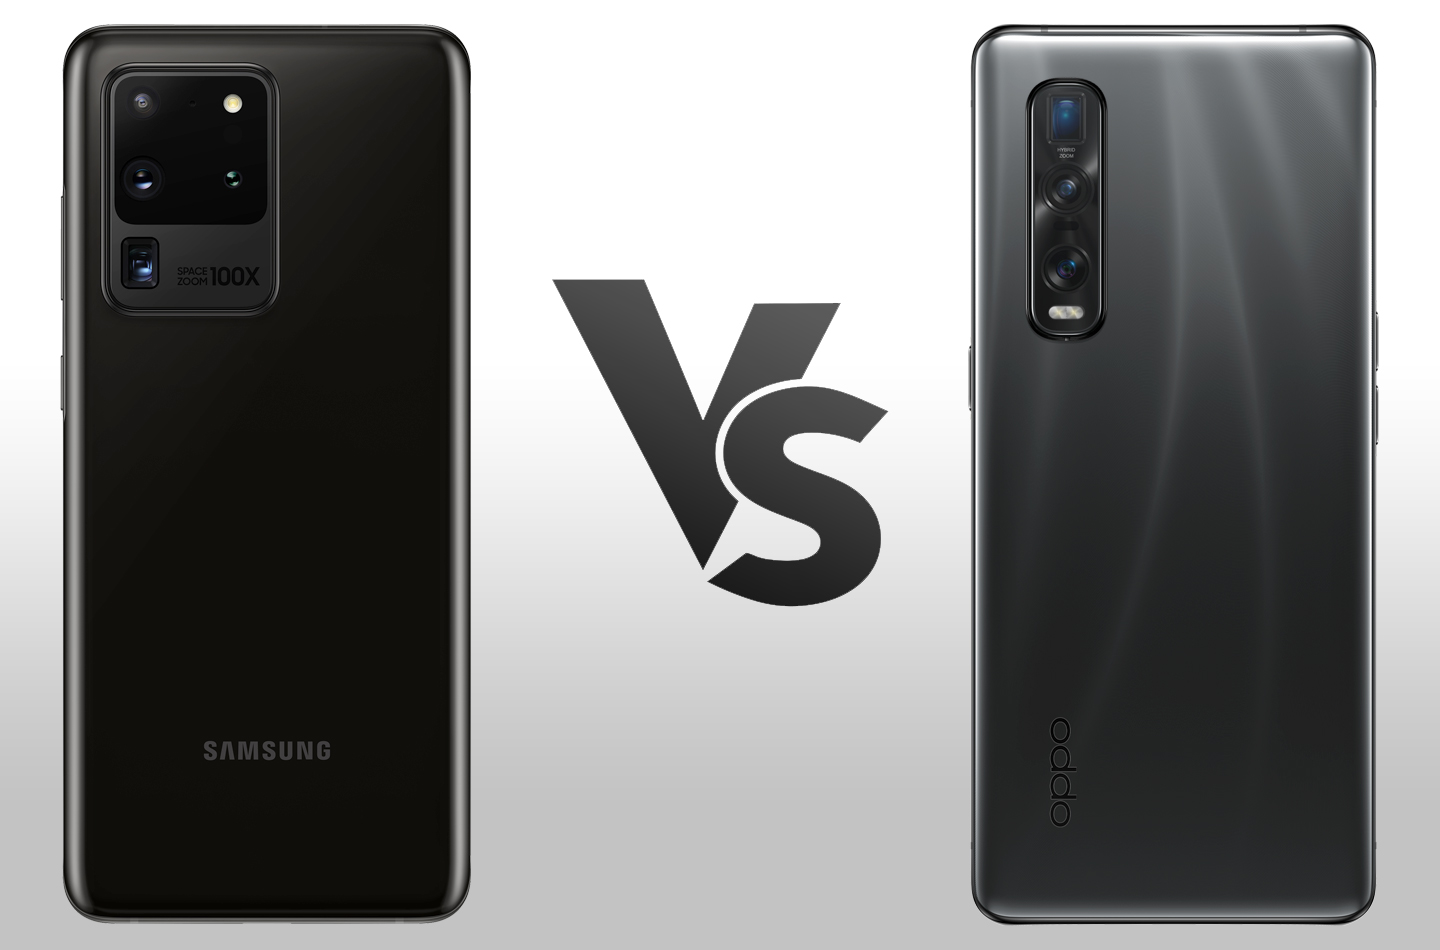 proza Wacht even Punt Samsung Galaxy S20 Ultra vergelijken met de Oppo Find X2 Pro | LetsGoDigital